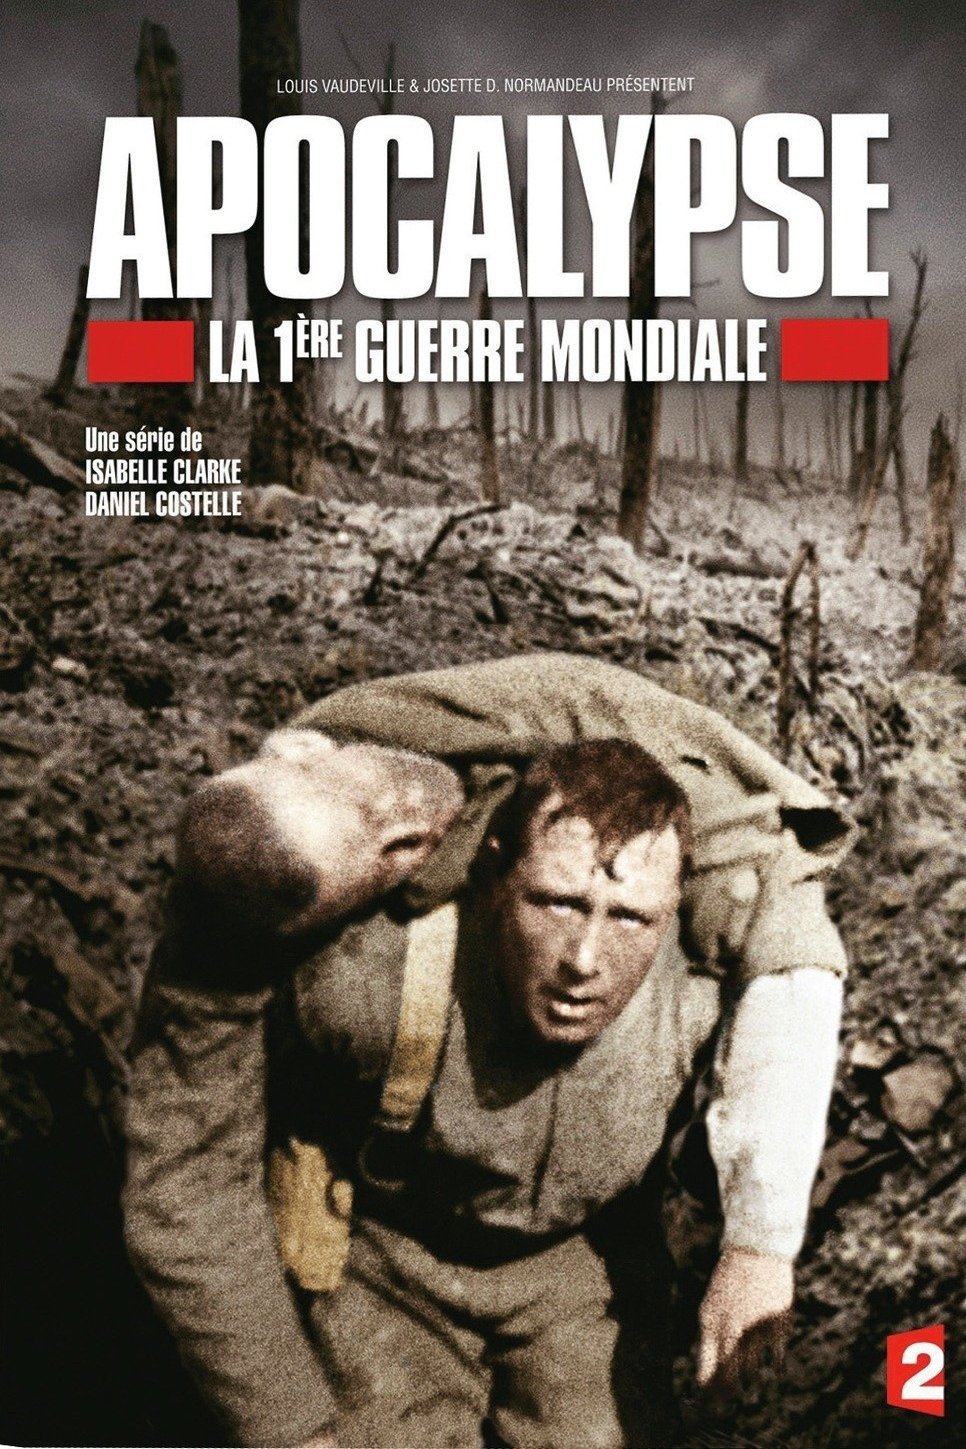 Poster of the movie Apocalypse WW1